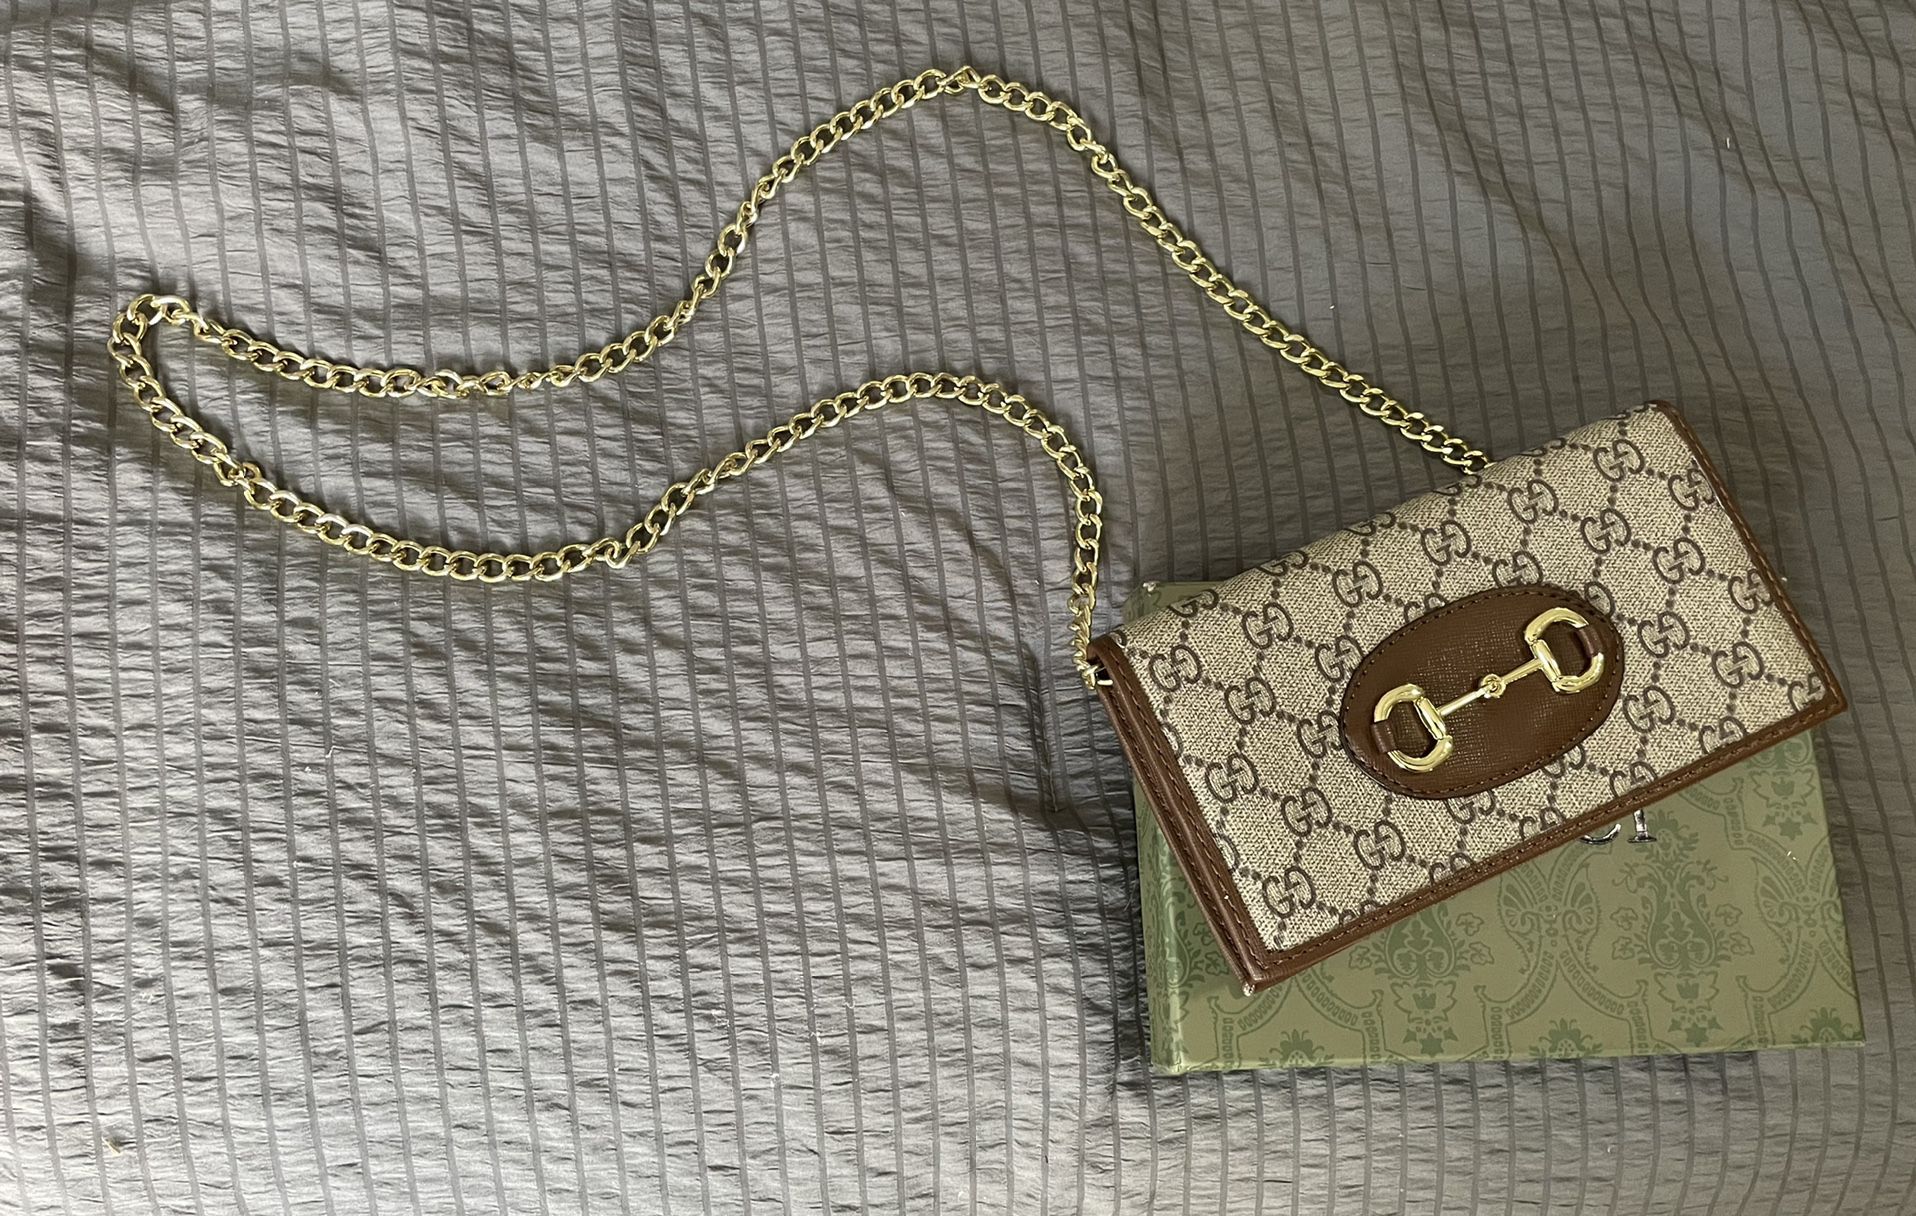 Stunning WOC Wallet On Chain Shoulder “bag”